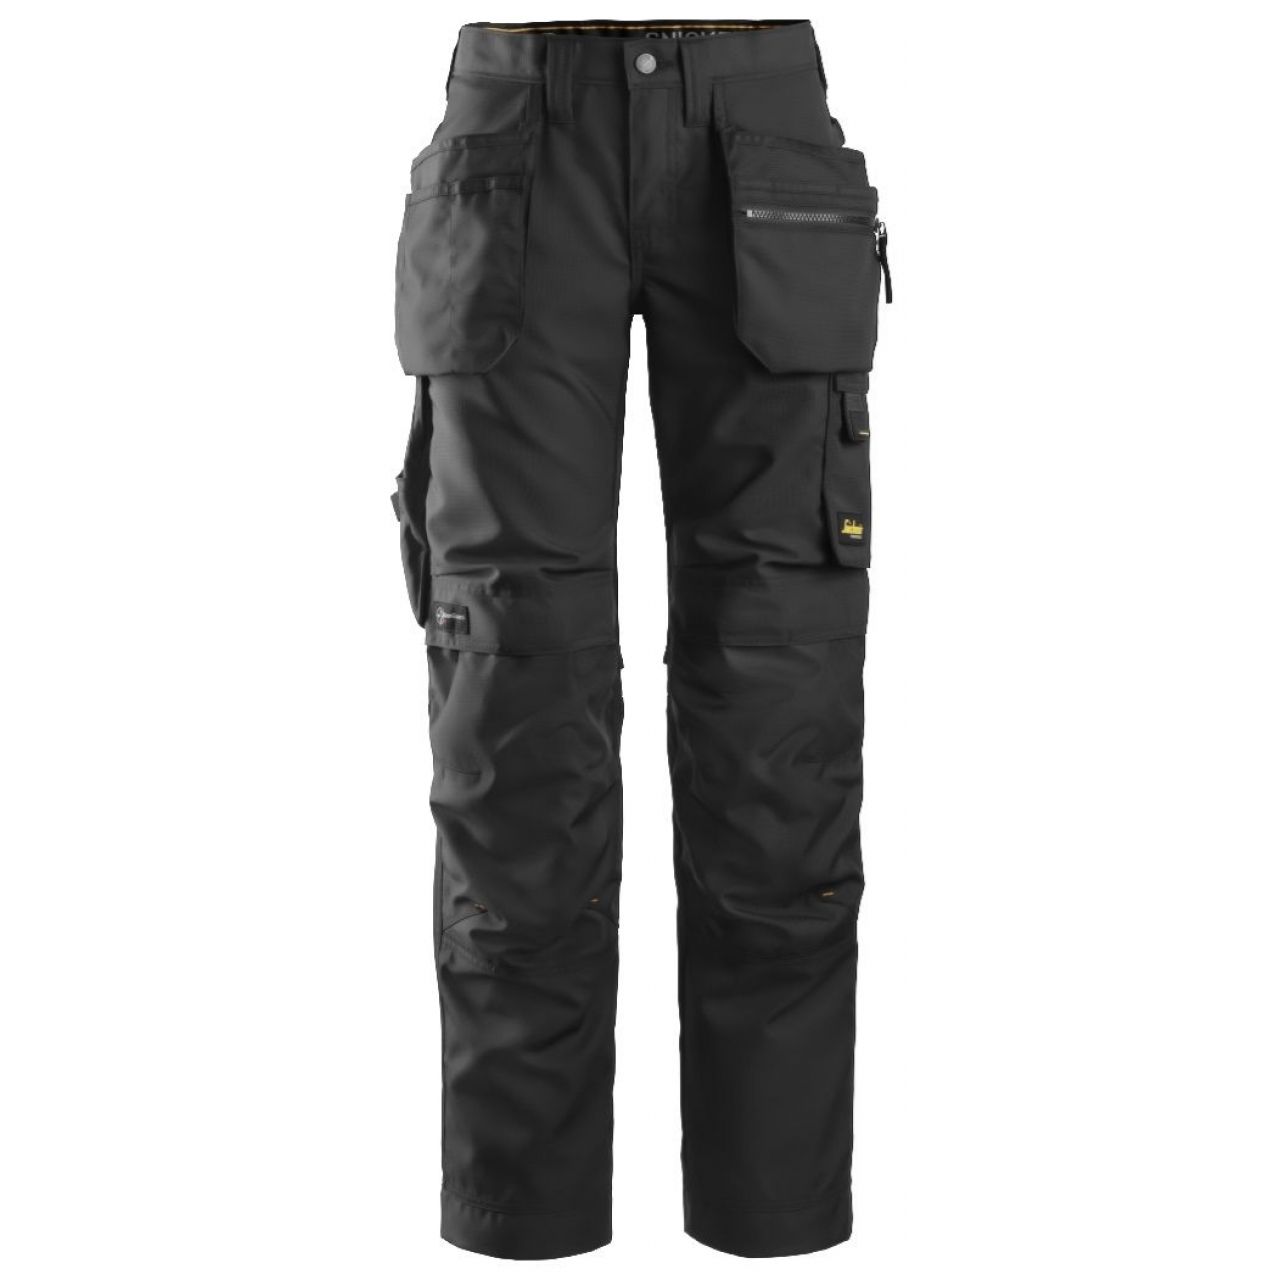 Pantalon de mujer AllroundWork+ con bolsillos flotantes negro talla 040